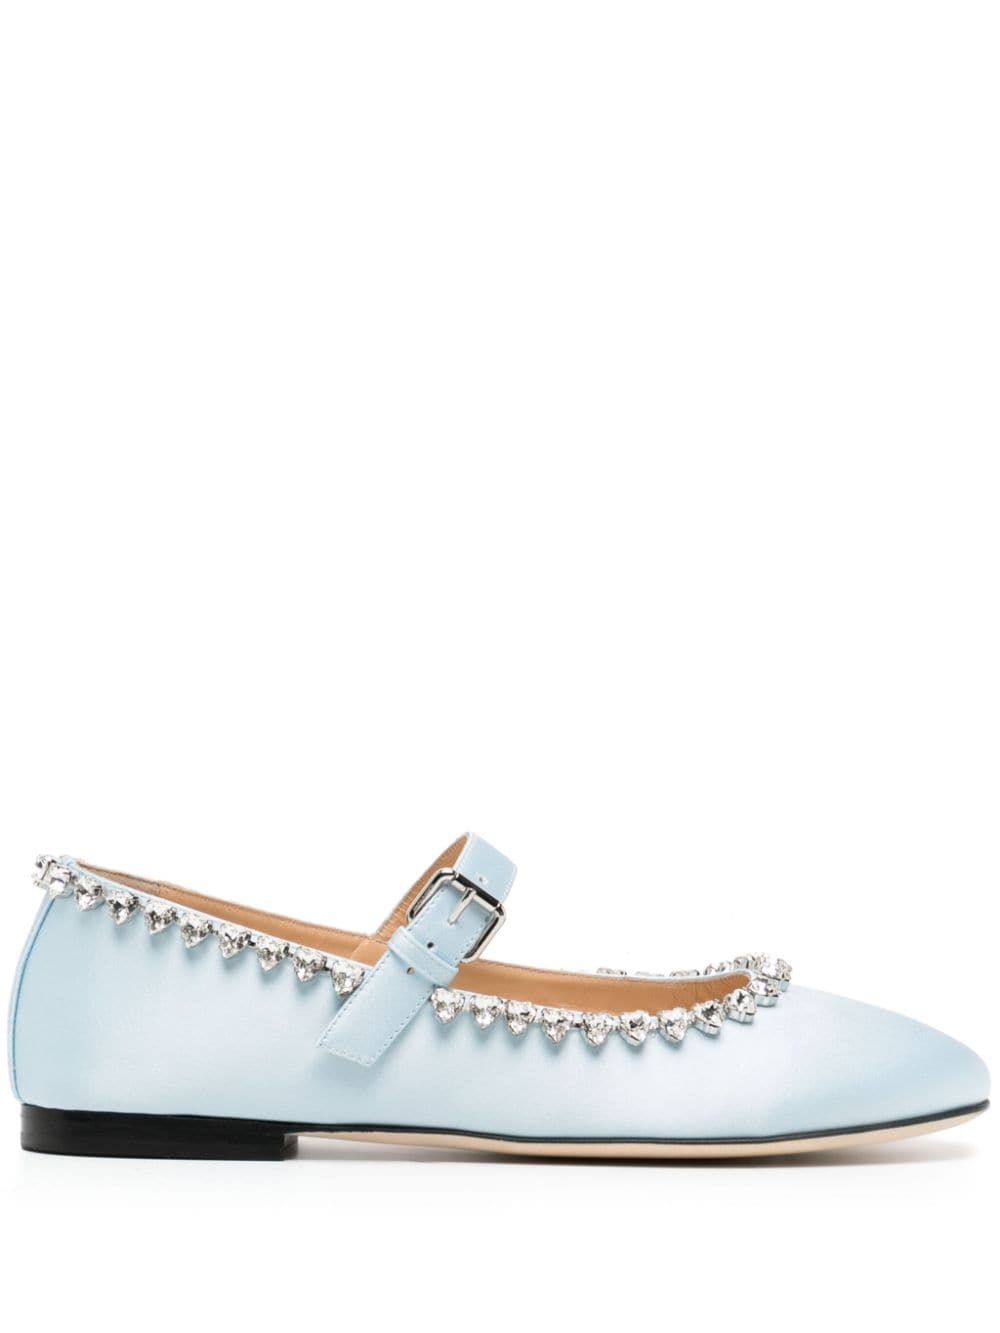 MACH & MACH Audrey crystal-embellished ballerina shoes Blue